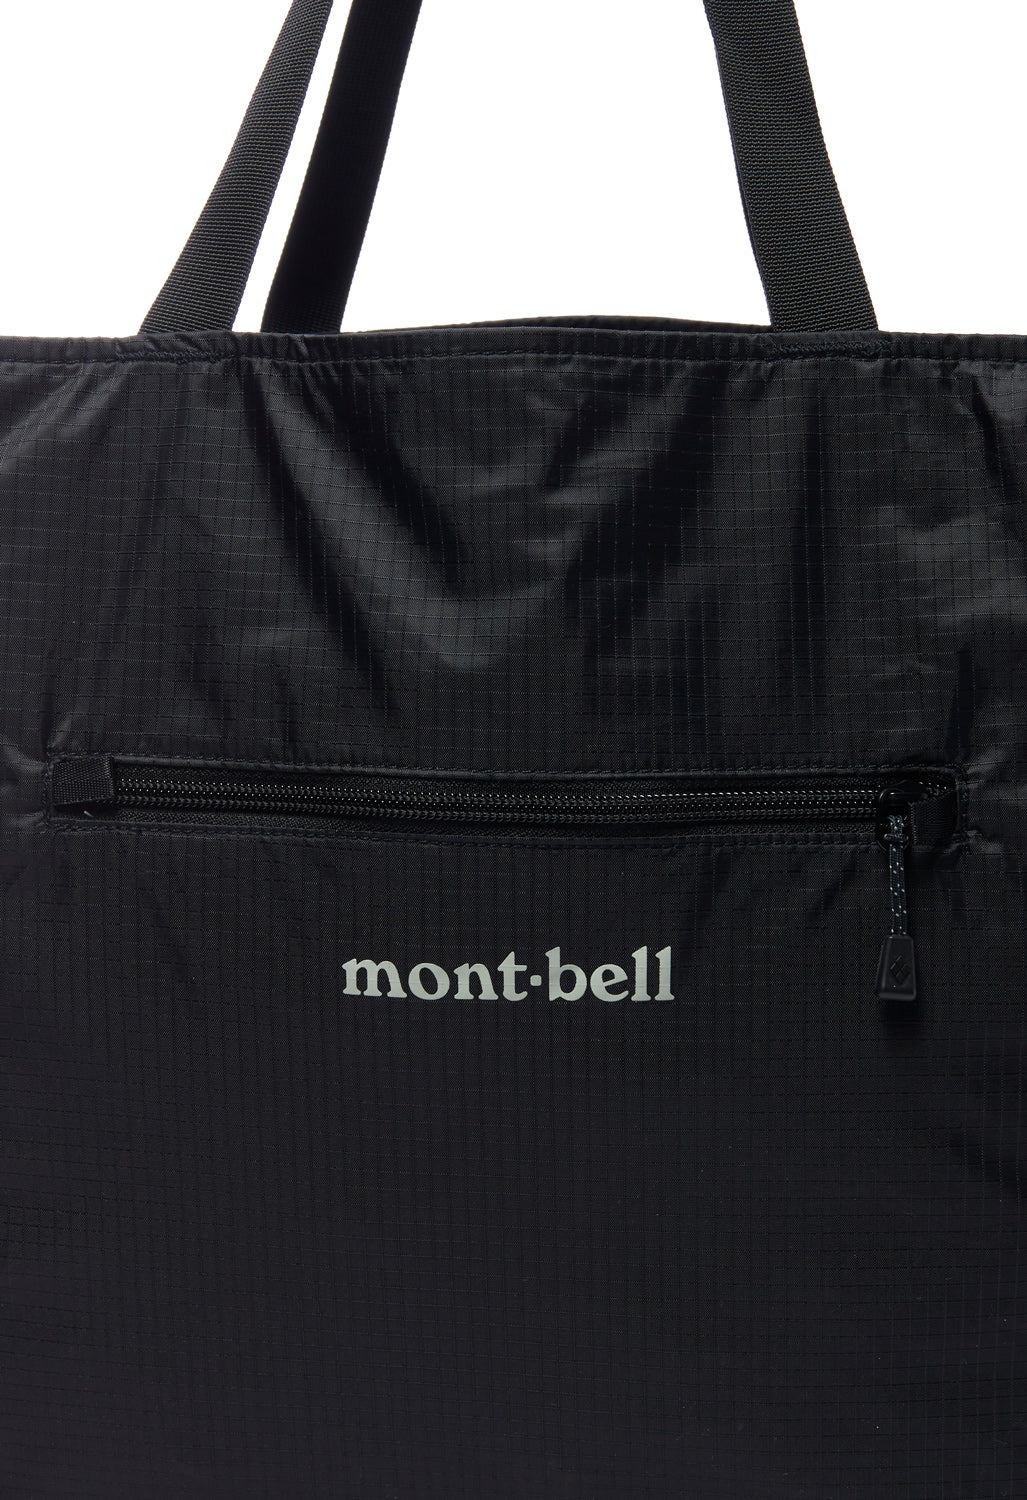 Montbell Pocketable Light Tote Large - Black